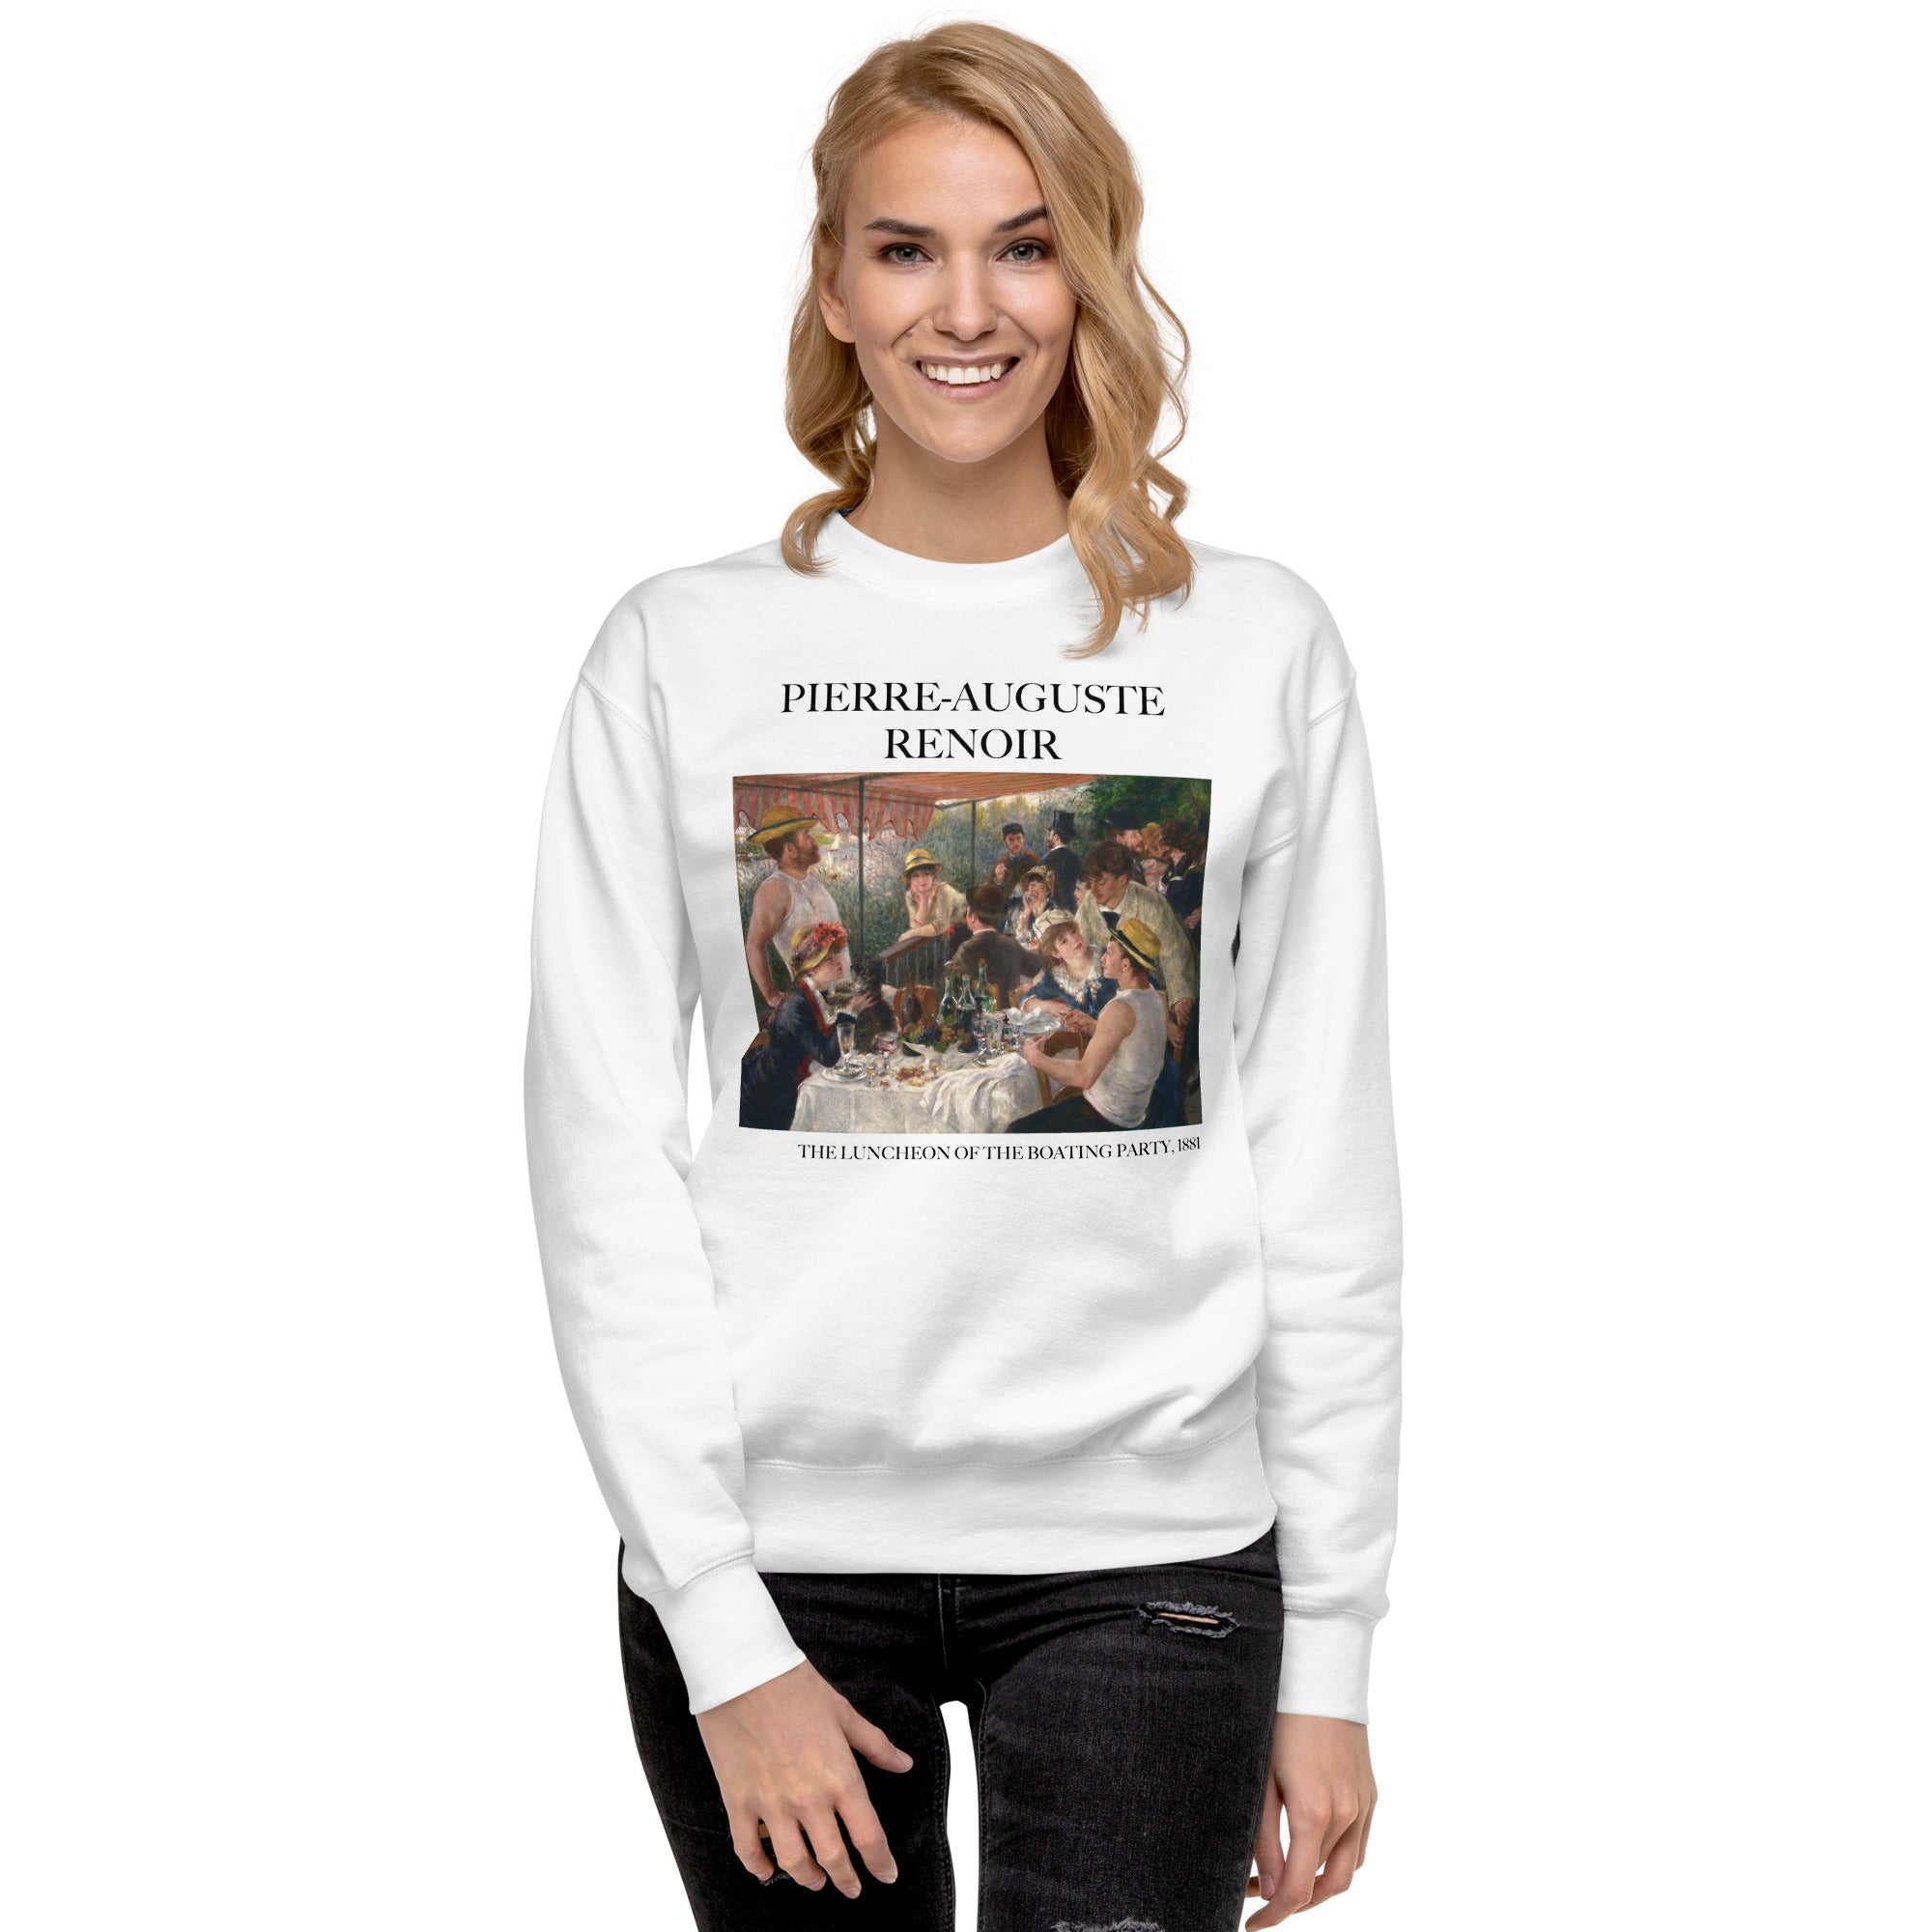 Pierre-Auguste Renoir 'The Luncheon of the Boating Party' Famous Painting Sweatshirt | Unisex Premium Sweatshirt